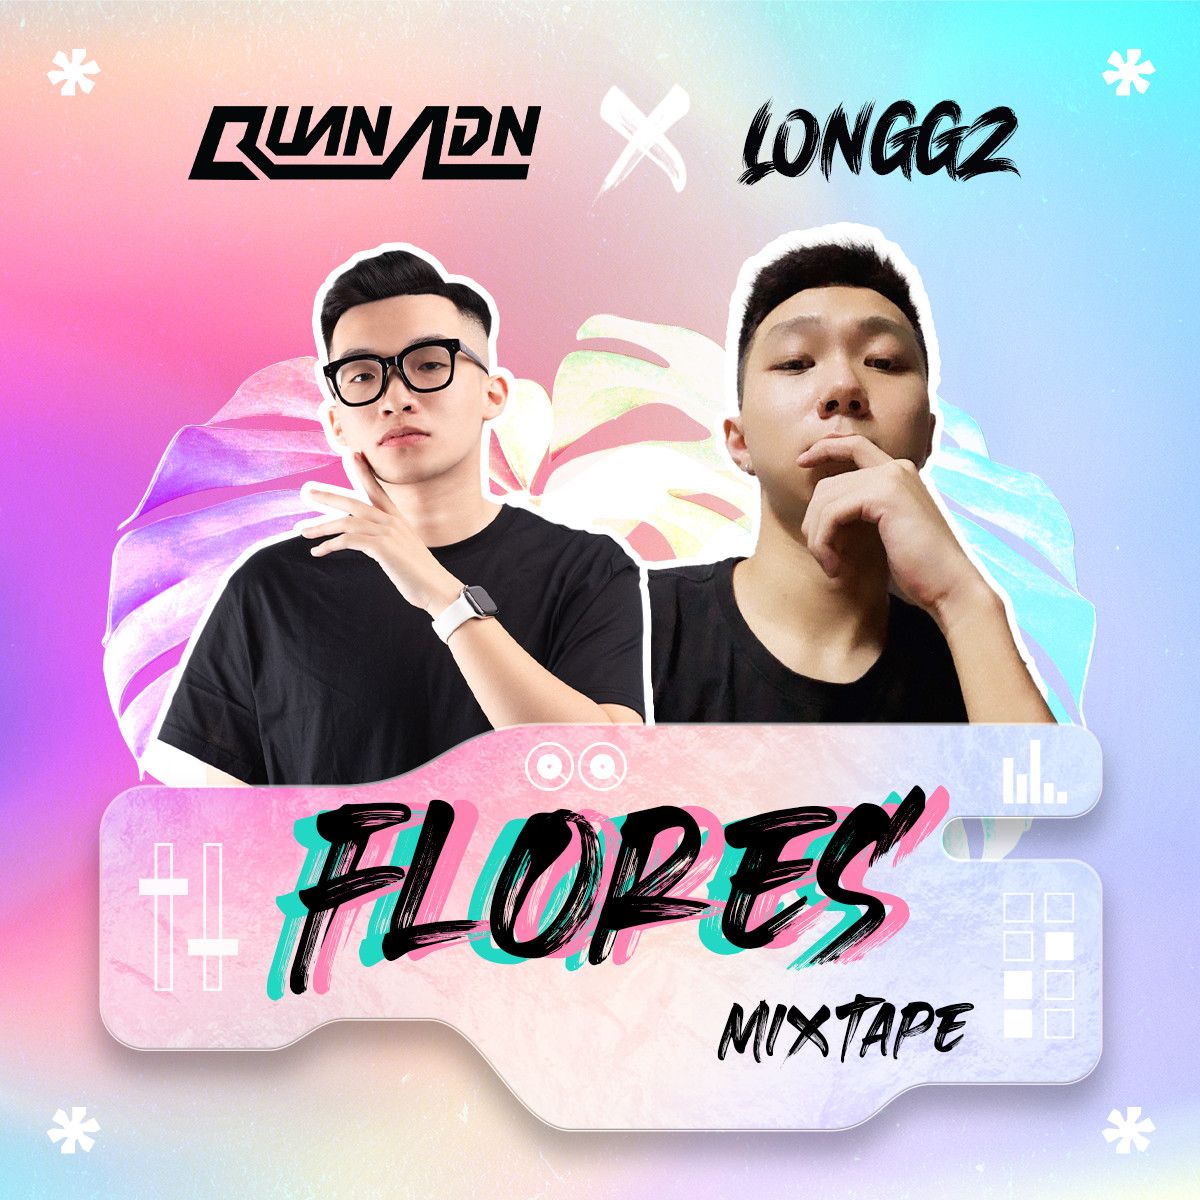 Ladata Mixtape - Flores by Quan ADN & LONGGZ